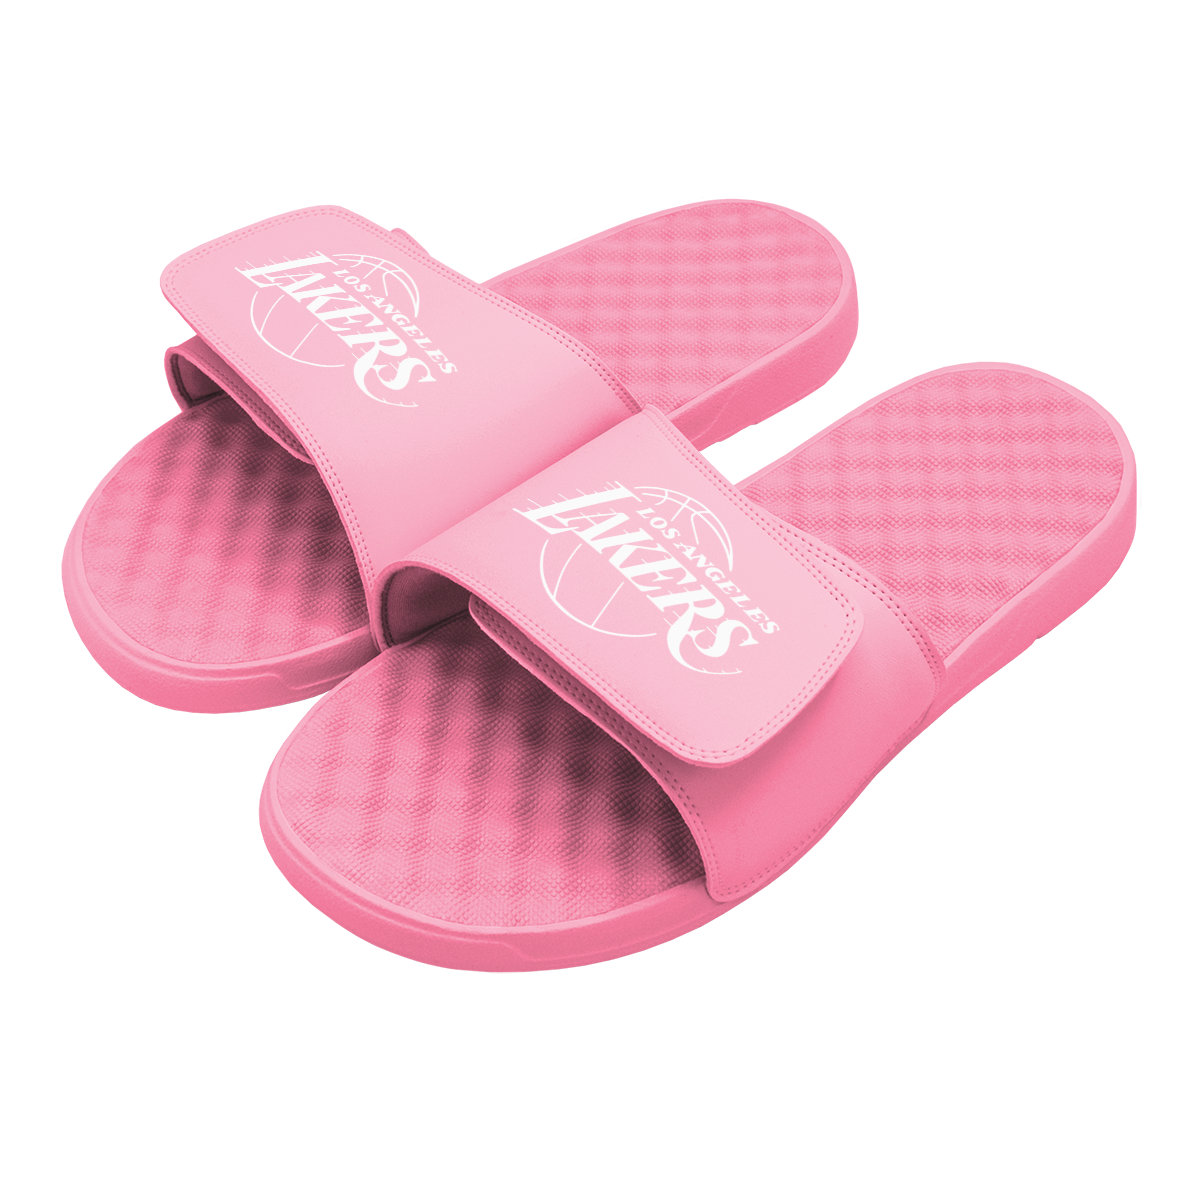 lakers flip flops